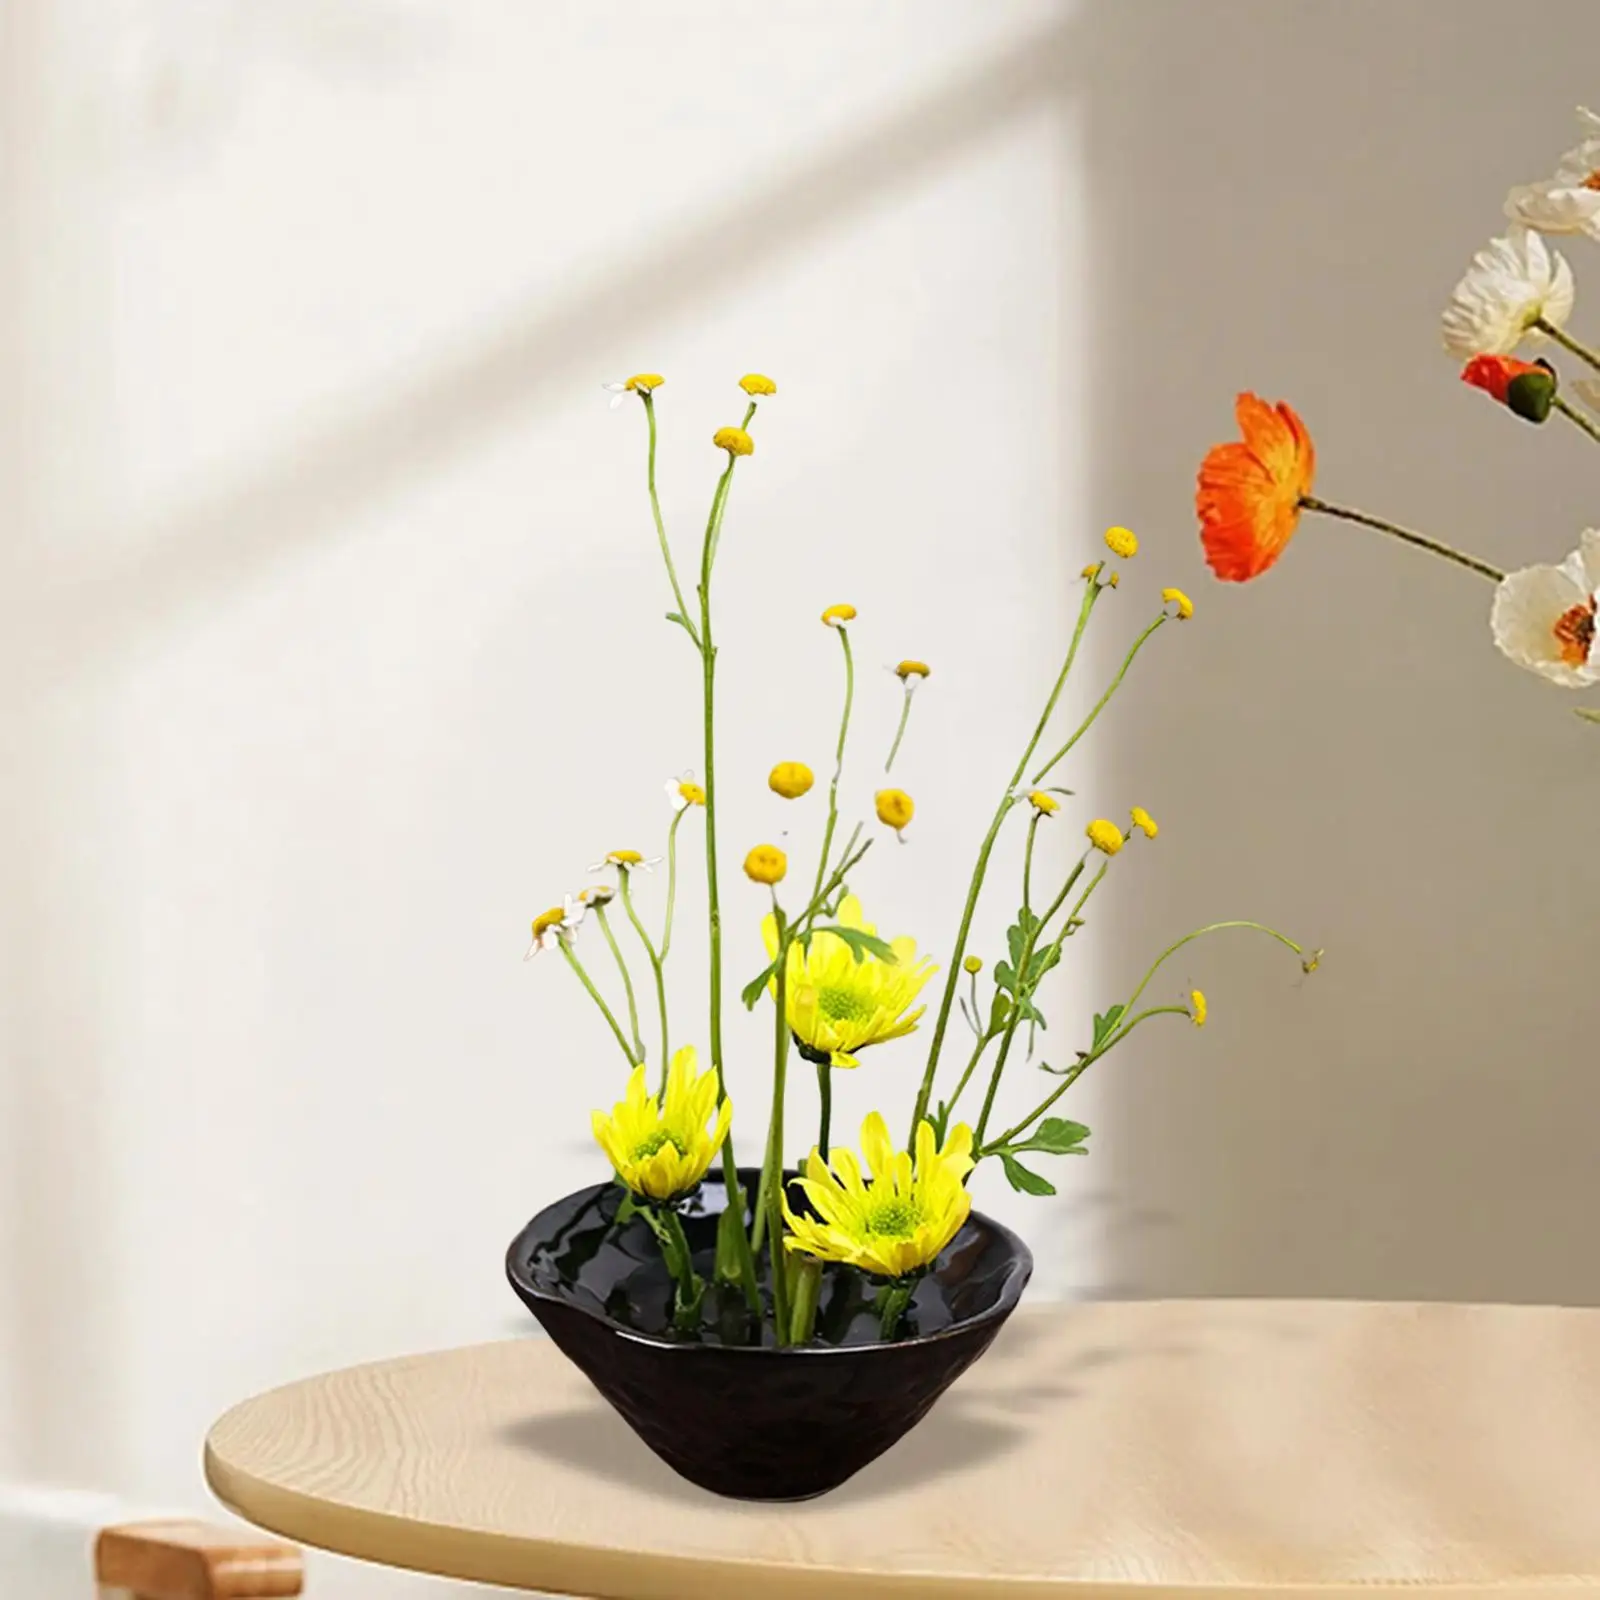 Flower Arrangement Bowl Stable Centerpiece Durable Fittings Multipurpose Ceramic Vase with Holes Flower Frog for Birthday Garden